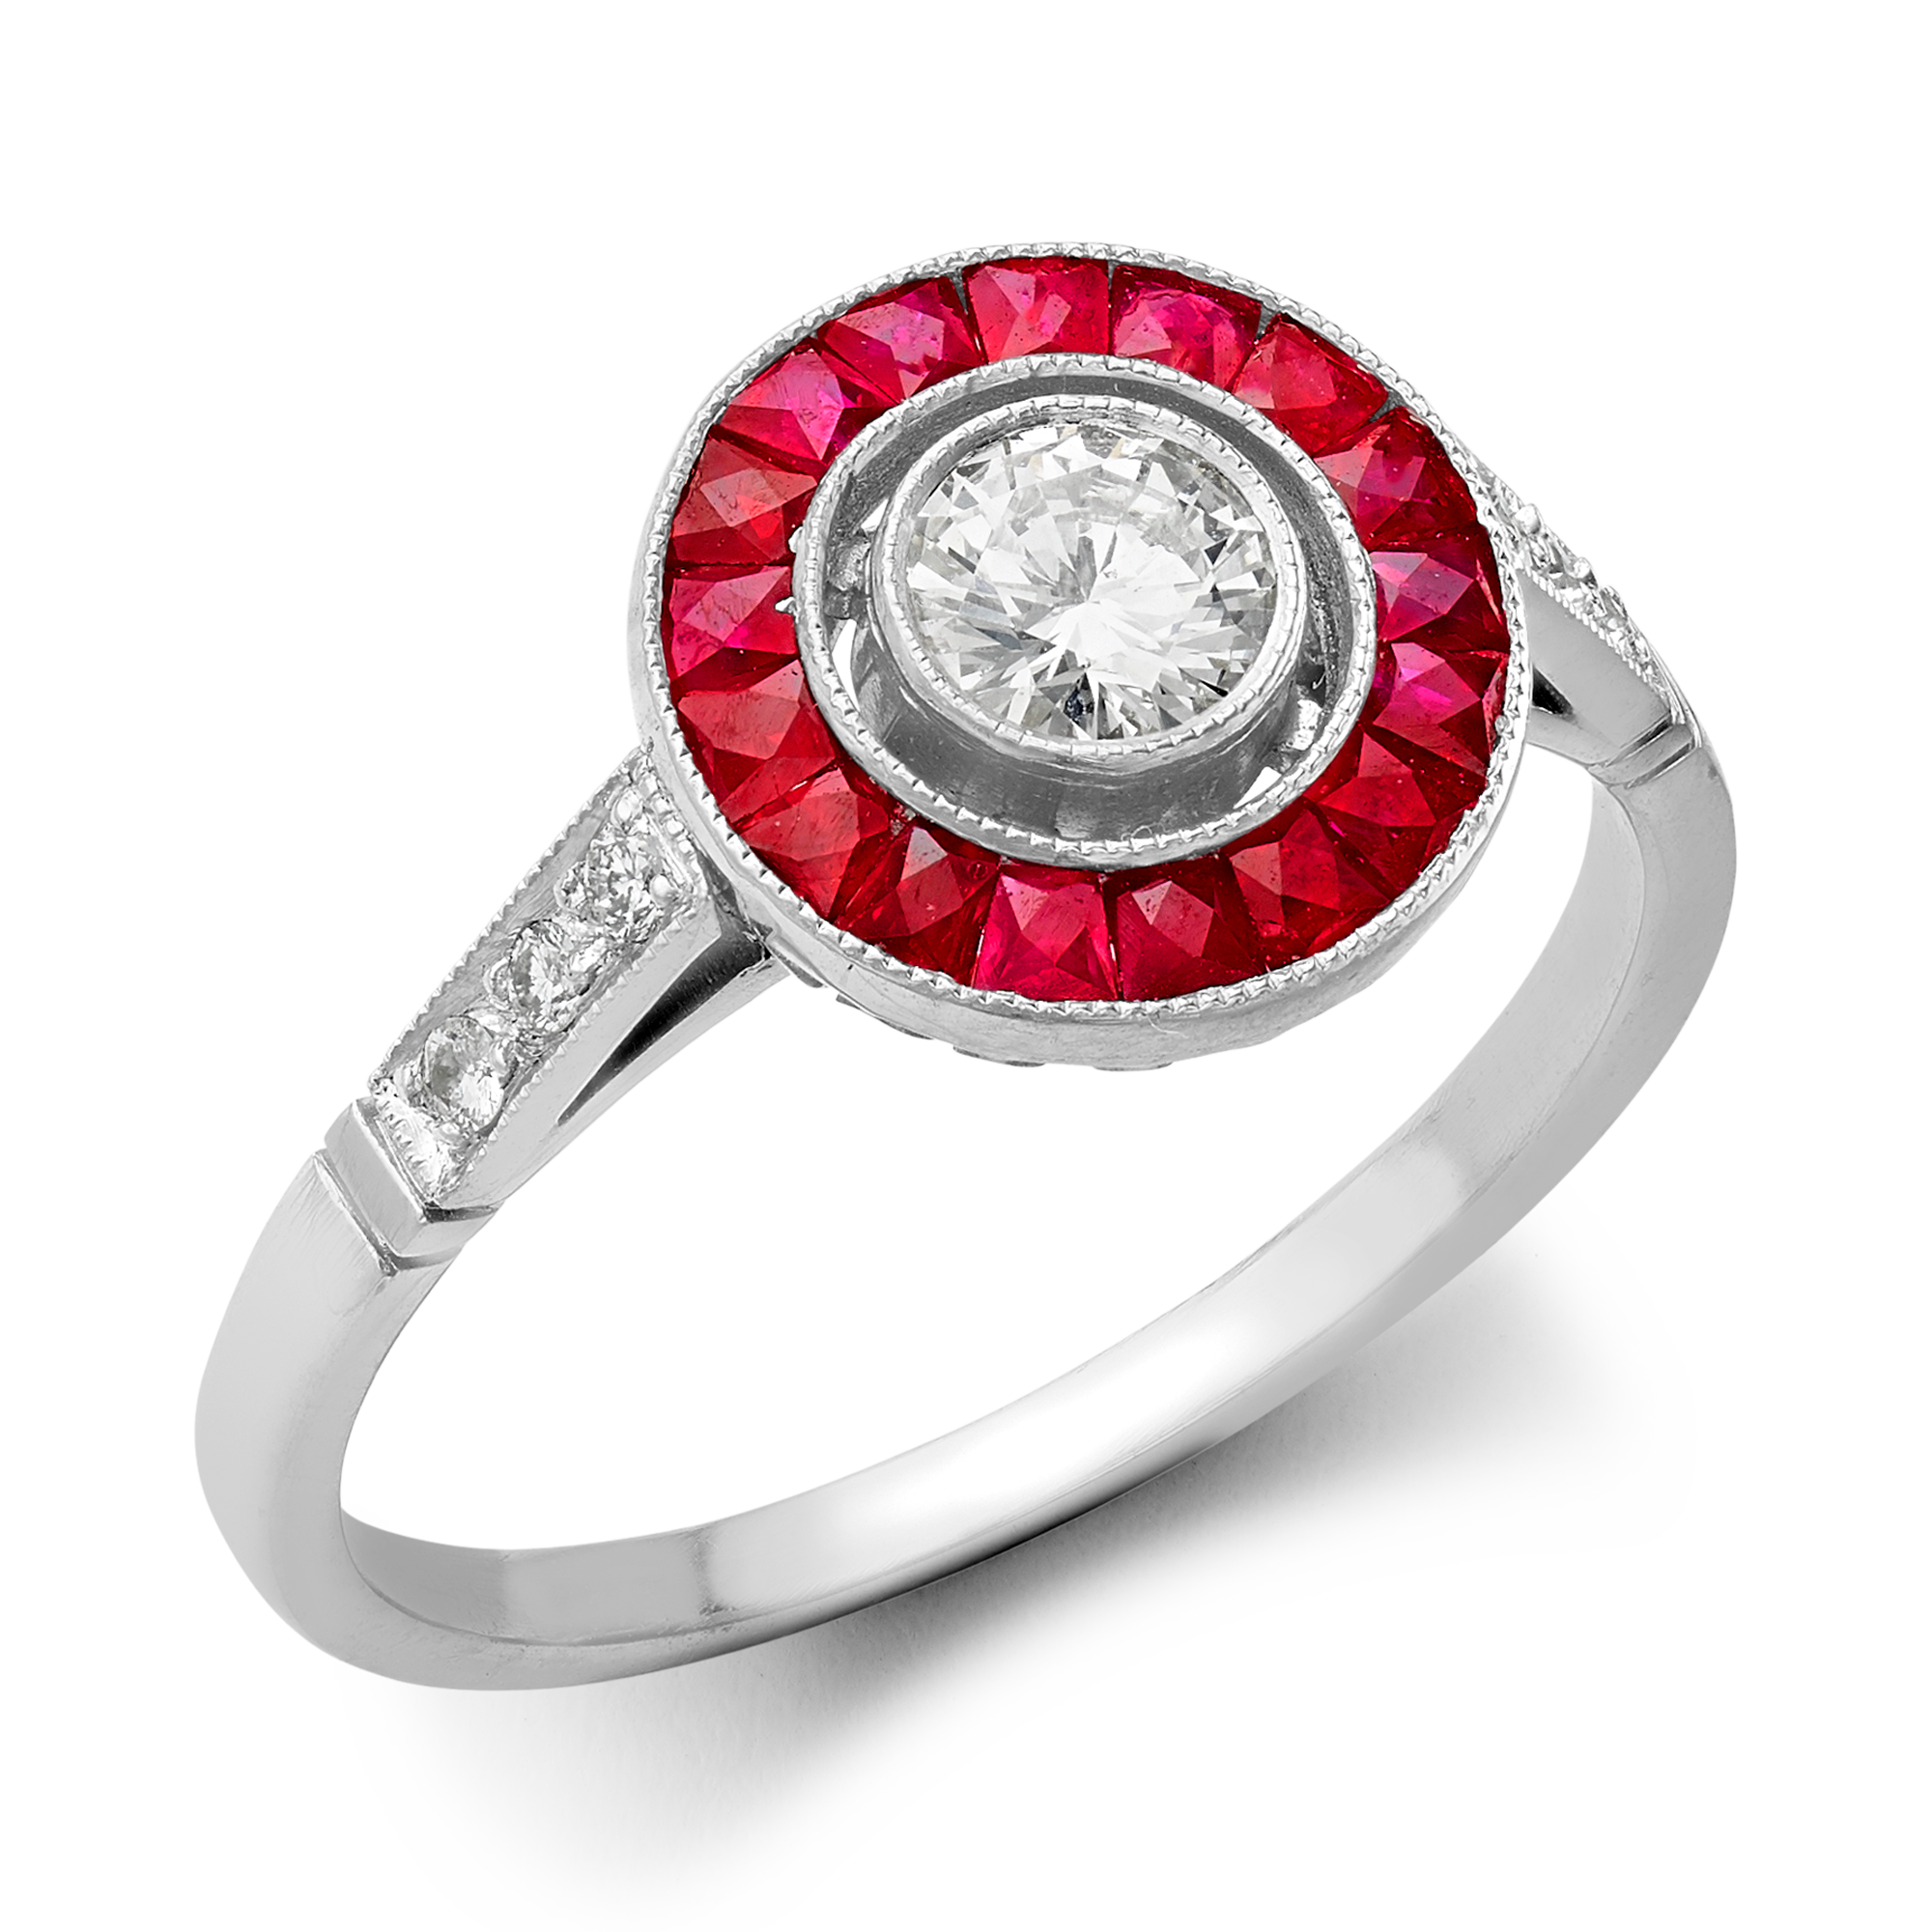 Art Deco Inspired Diamond & Ruby Target Ring Brilliant & Calibre Cut, Millegrain Set_1